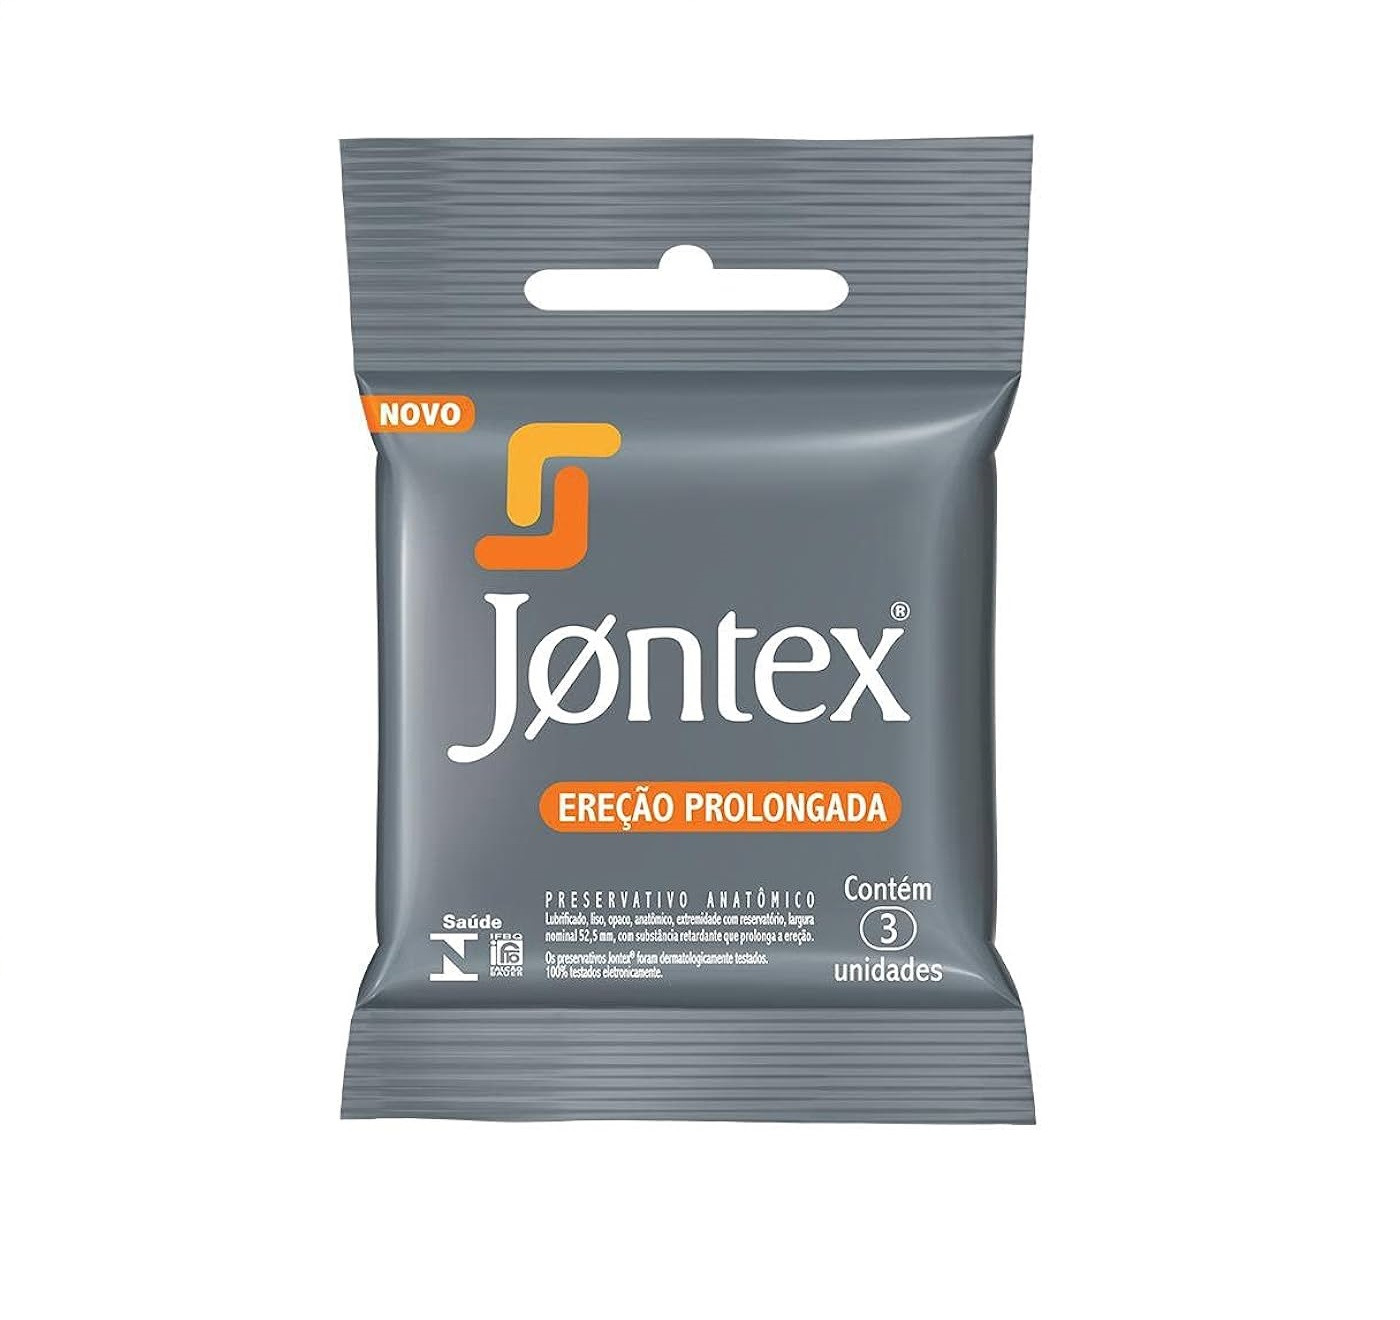 Preservativo Jontex Marathon com 3 Unidades